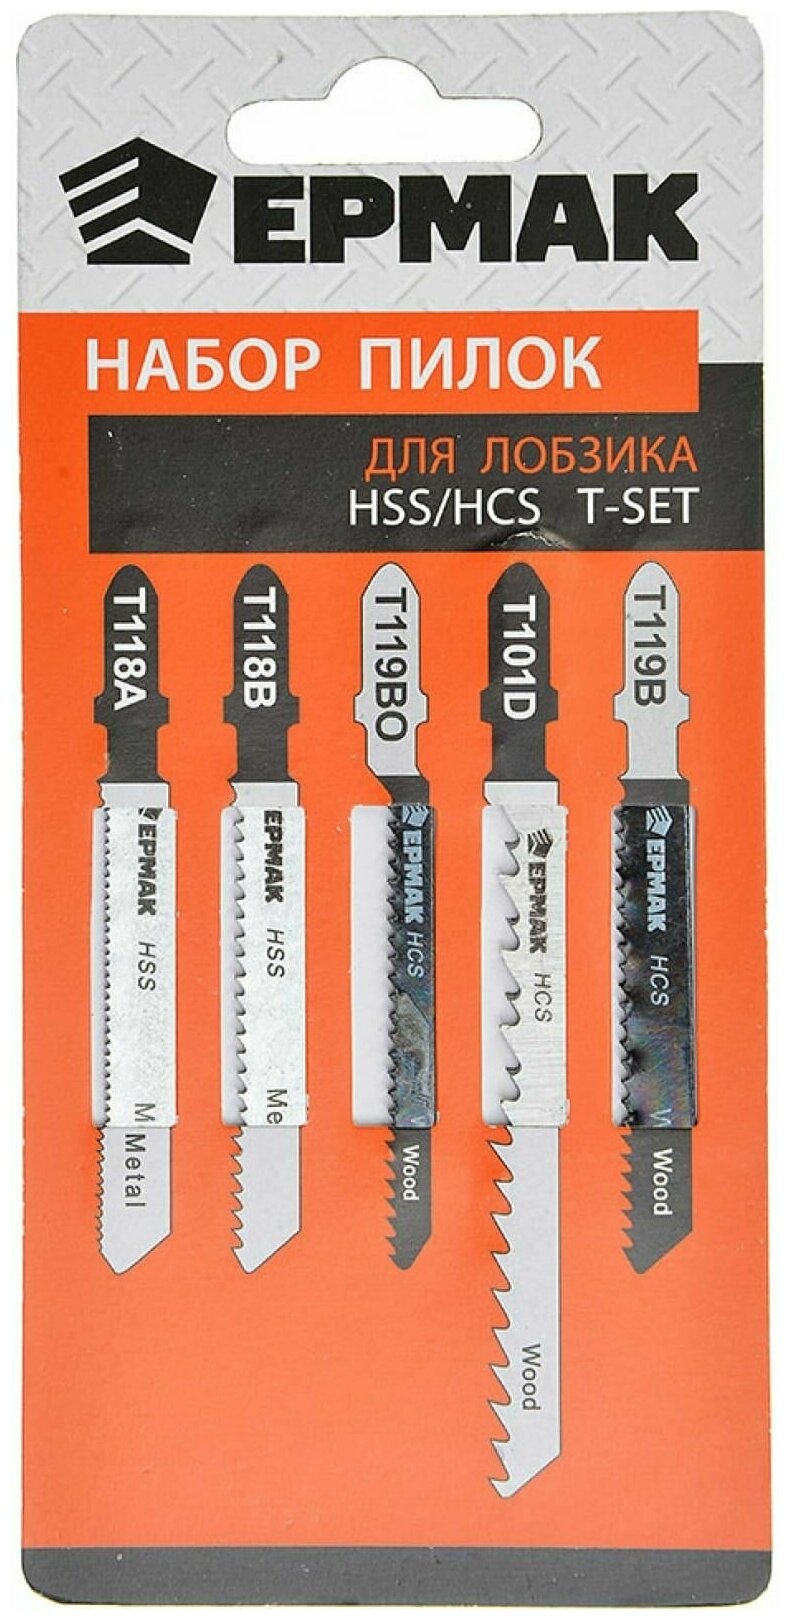 Пилка Ермак T-SET HSS/HCS по дереву/металлу/пластику 5шт 664-030